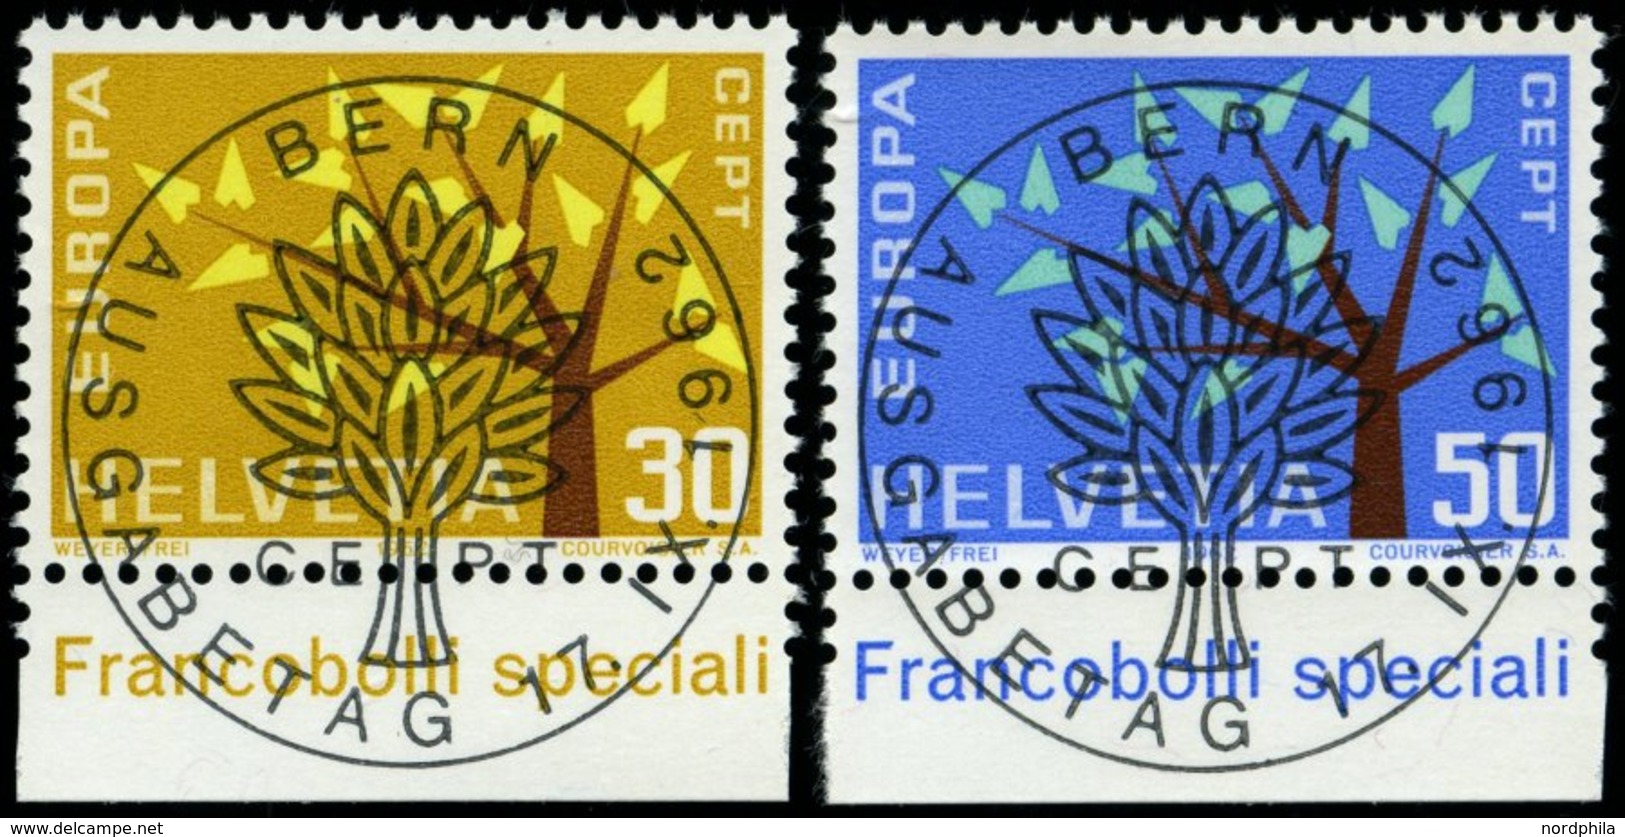 SCHWEIZ BUNDESPOST 756/7 O, 1962, Europa Mit Ersttags-Vollstempeln, Pracht - 1843-1852 Federal & Cantonal Stamps